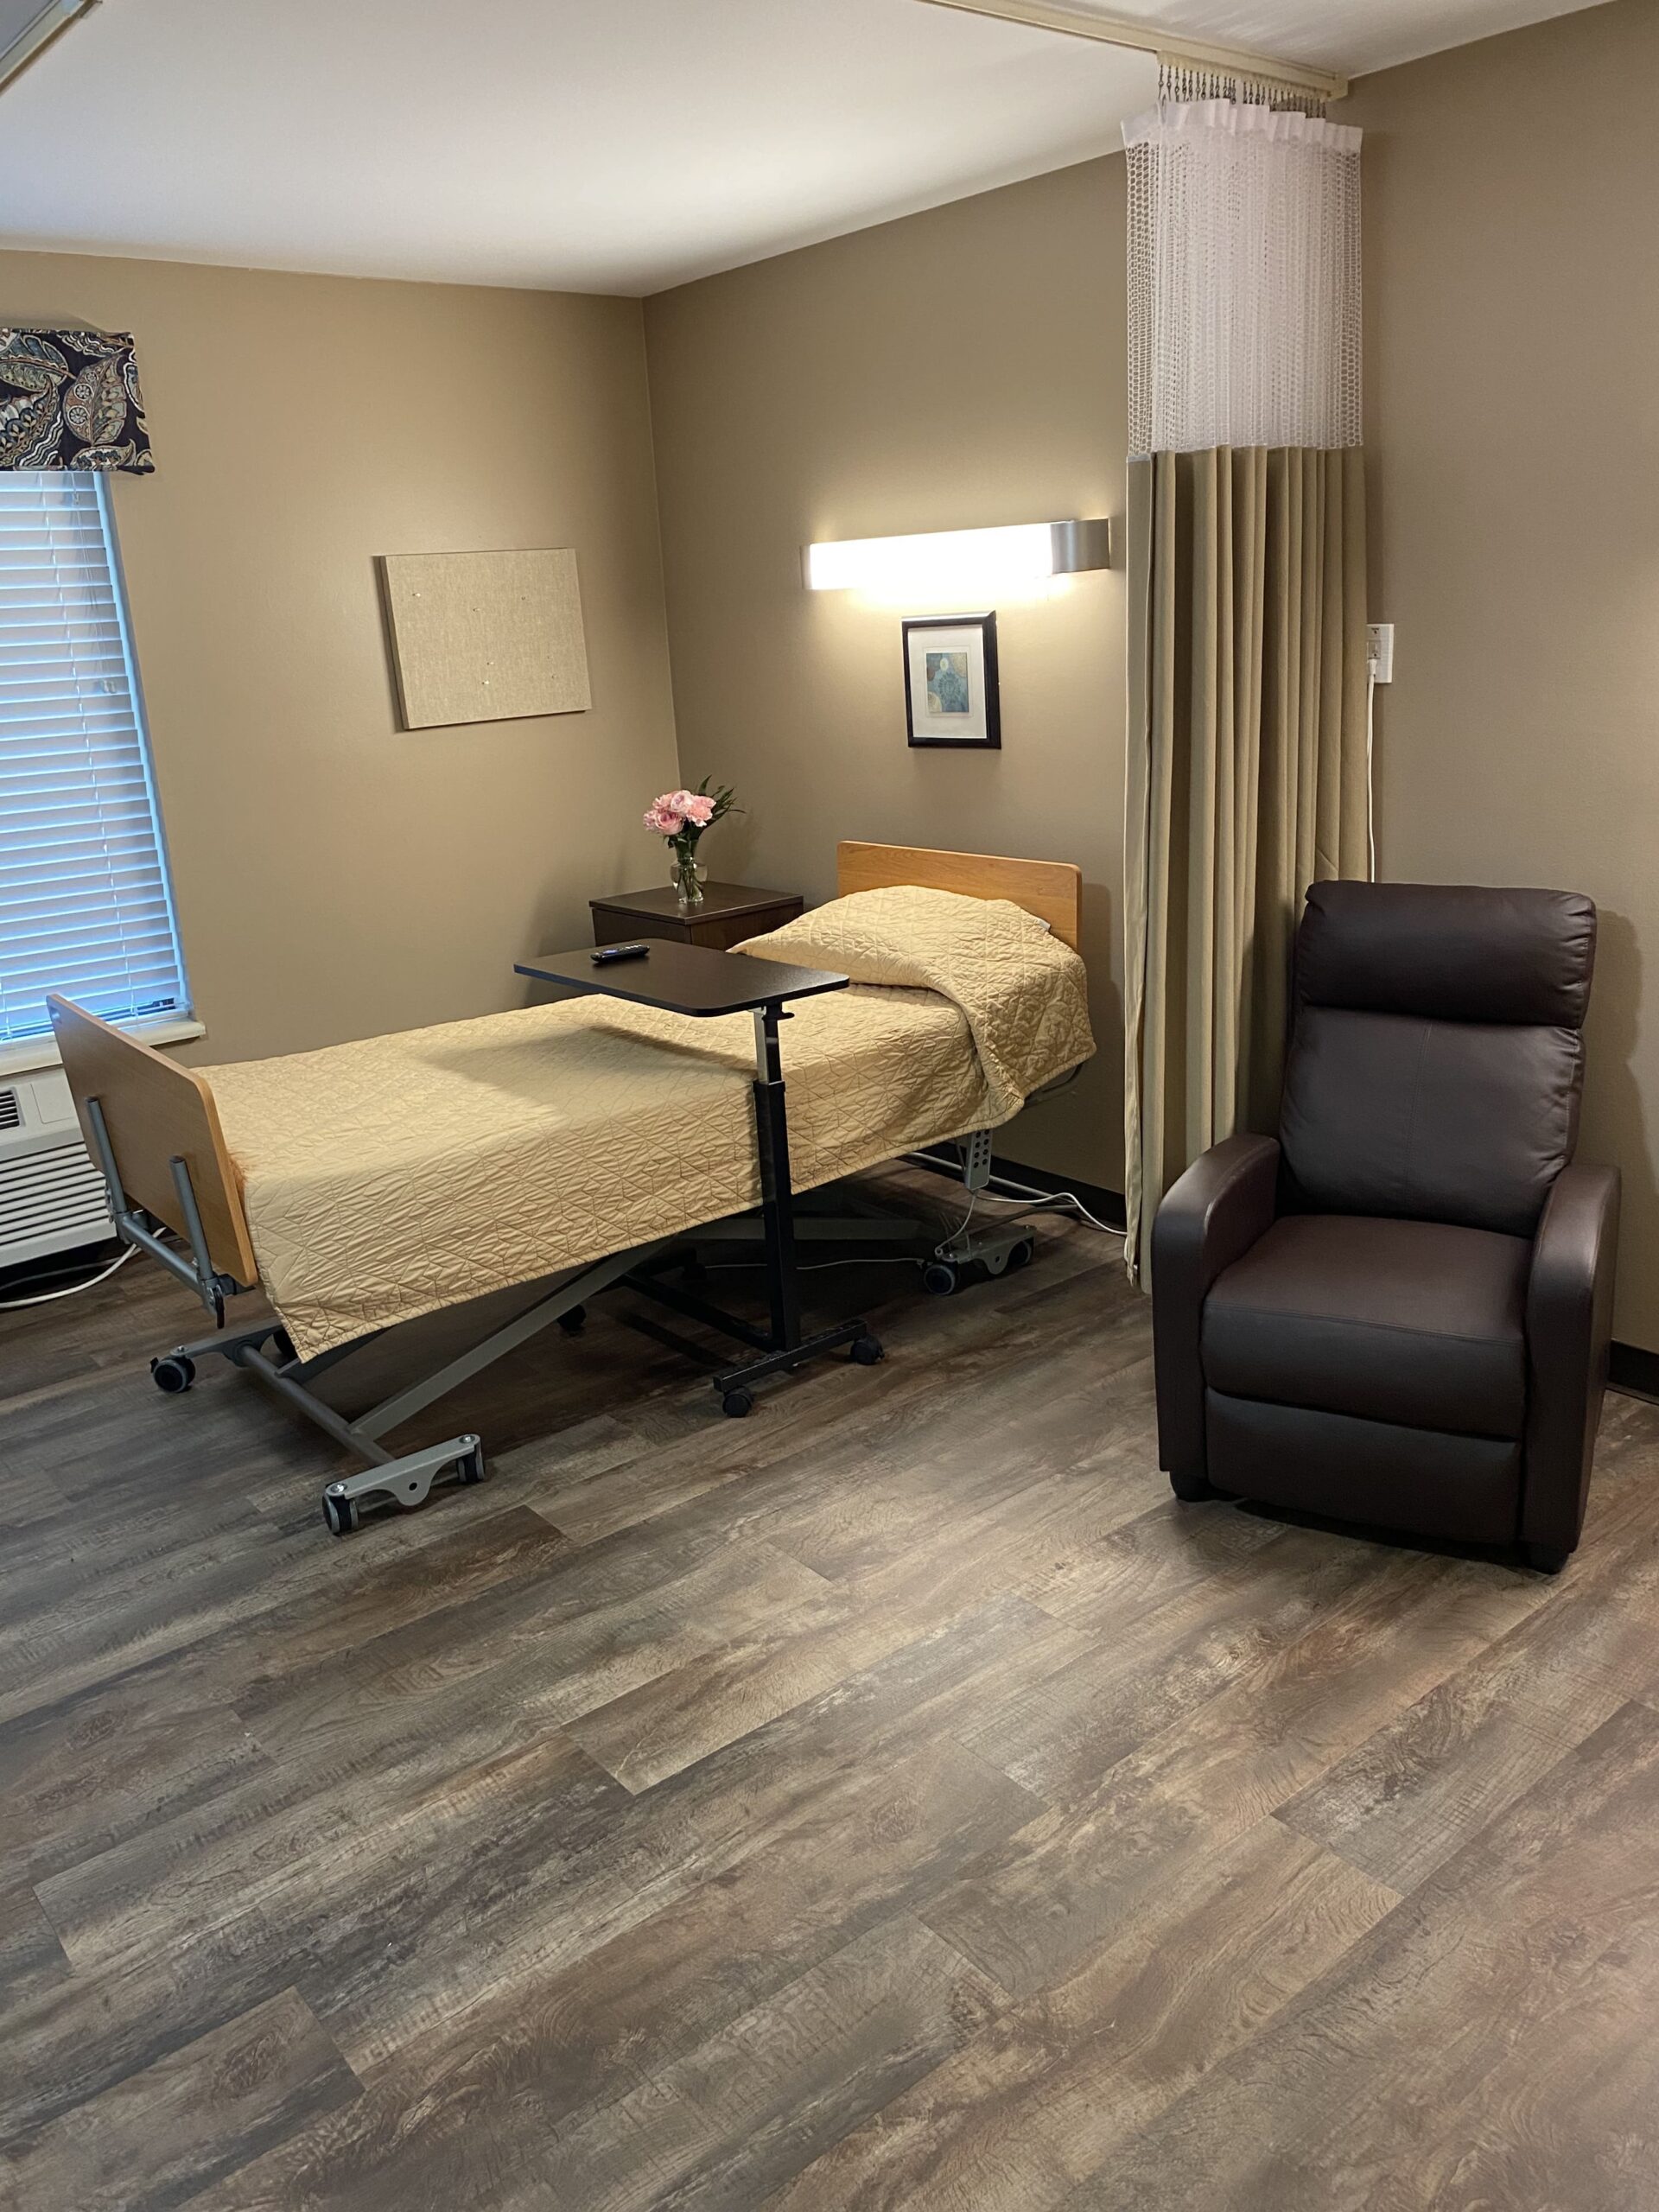 Brickyard Healthcare Woodlands Care Center resident bedroom suite